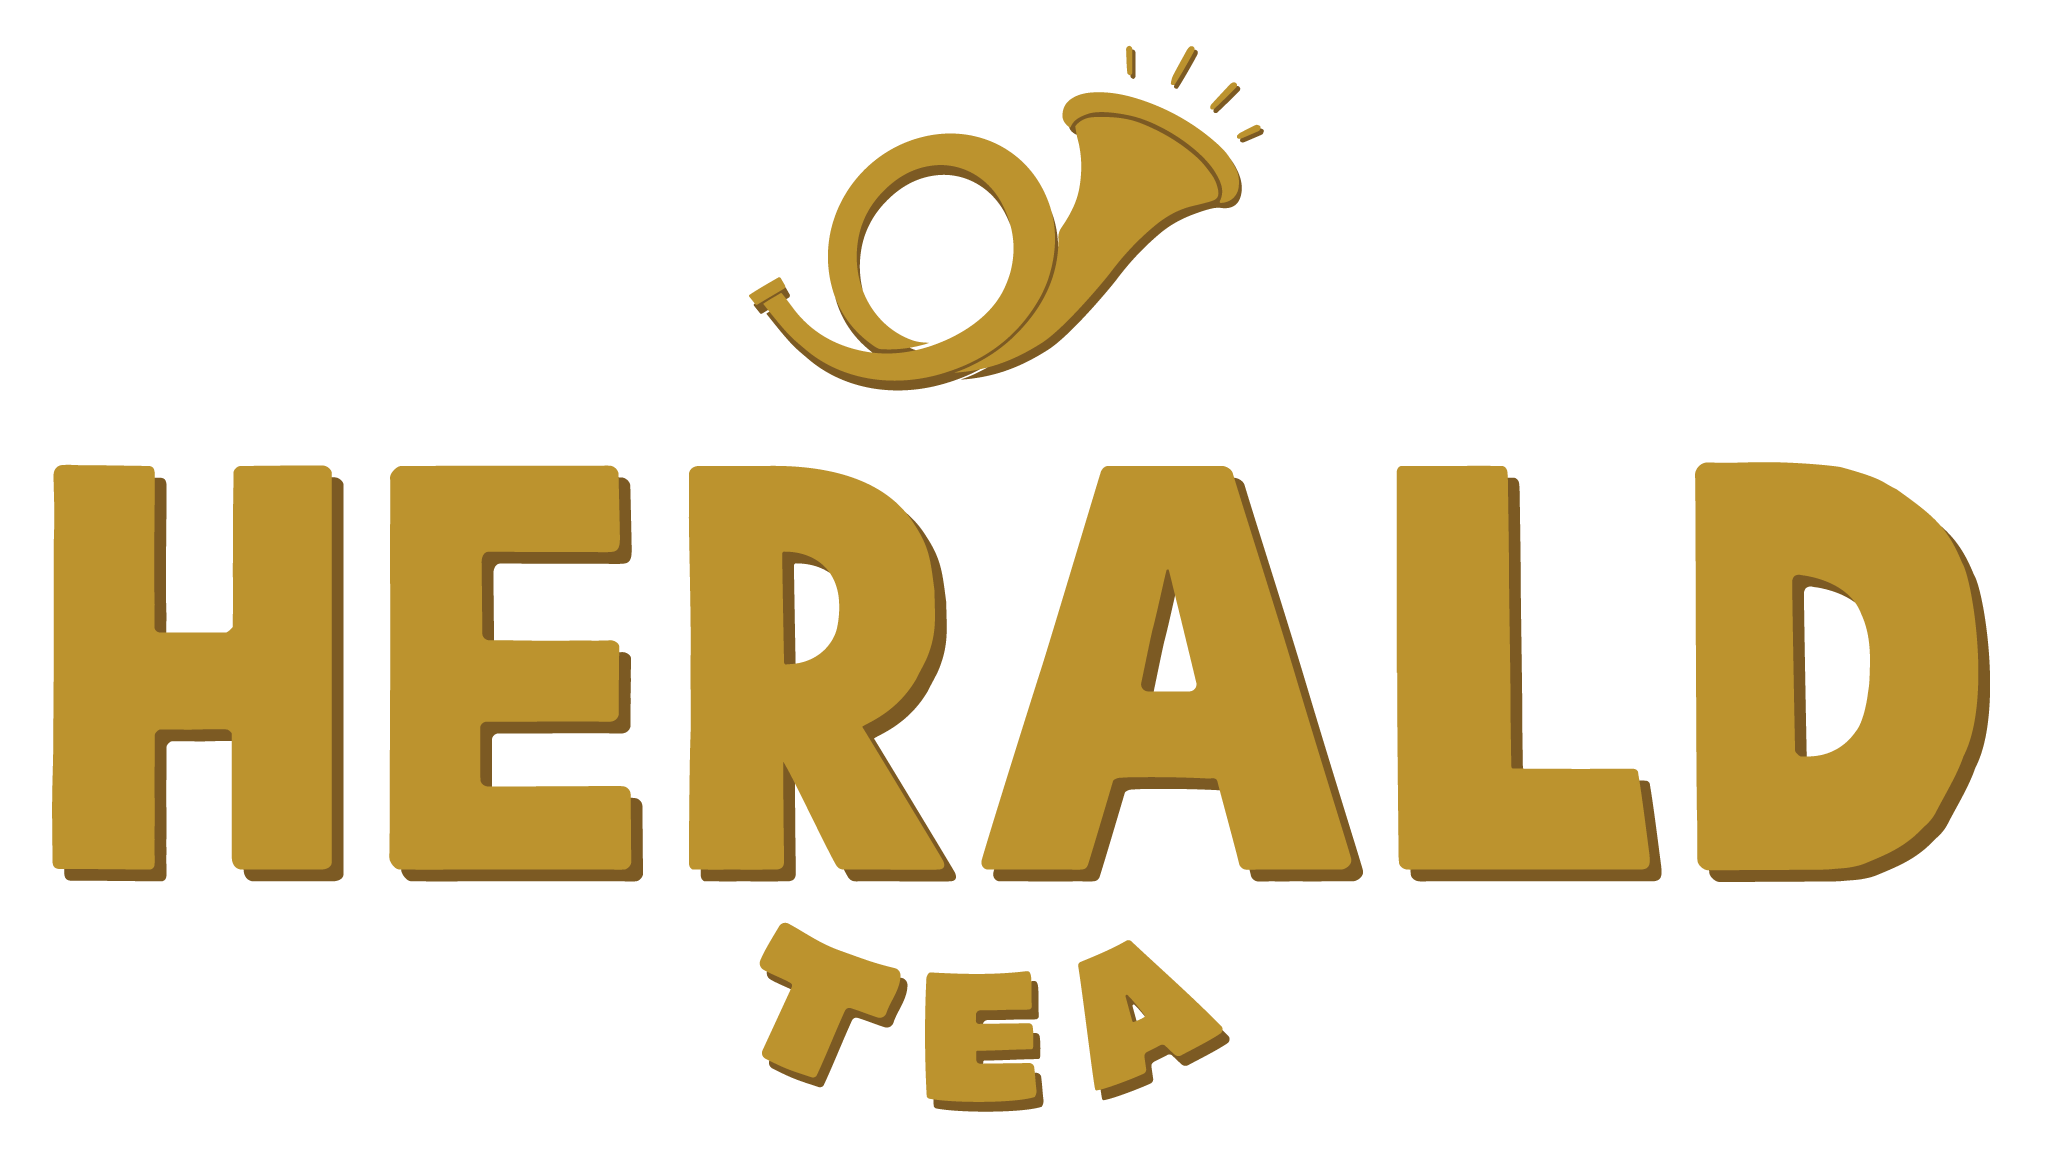 Herald Tea Co